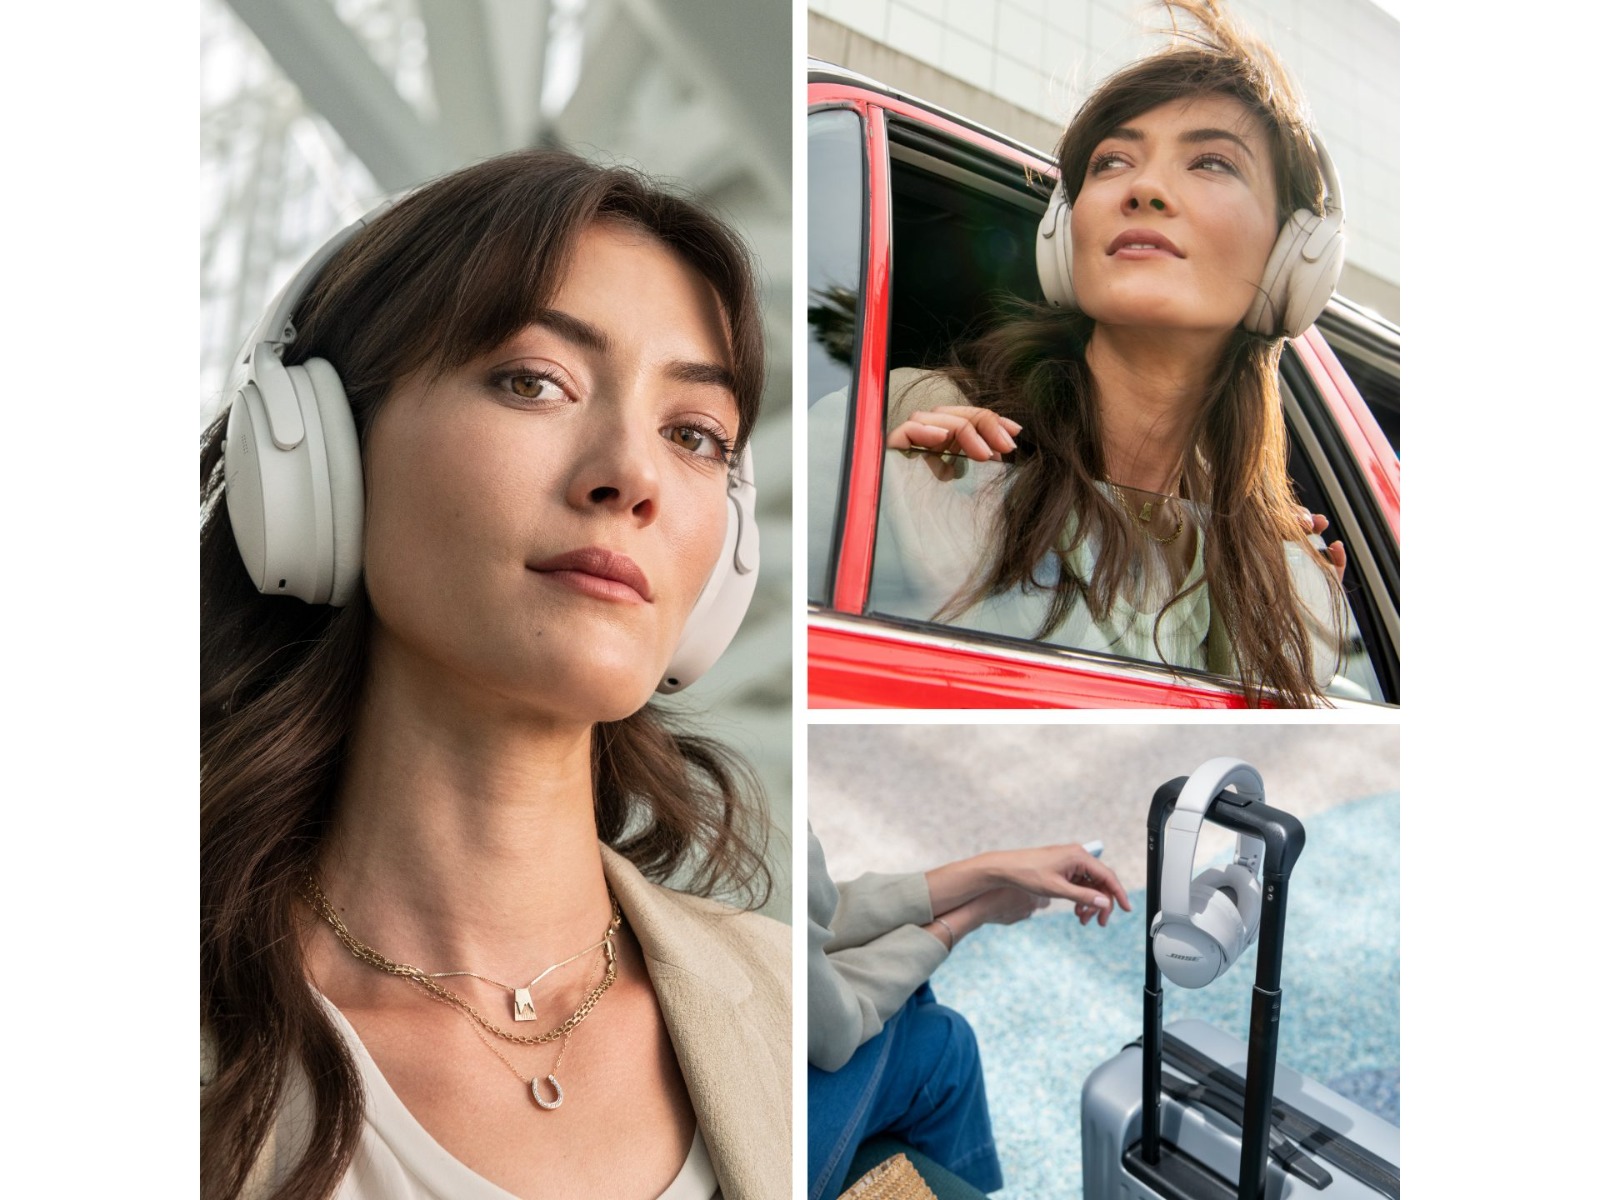 Bose QuietComfort 45,Wireless Over Ear Headphones,หูฟังไร้สาย,หูฟังบลูทูธ,หูฟังครอบหู,หูฟังตัดเสียงรบกวน,active noise cancellation,หูฟังเสียงดี